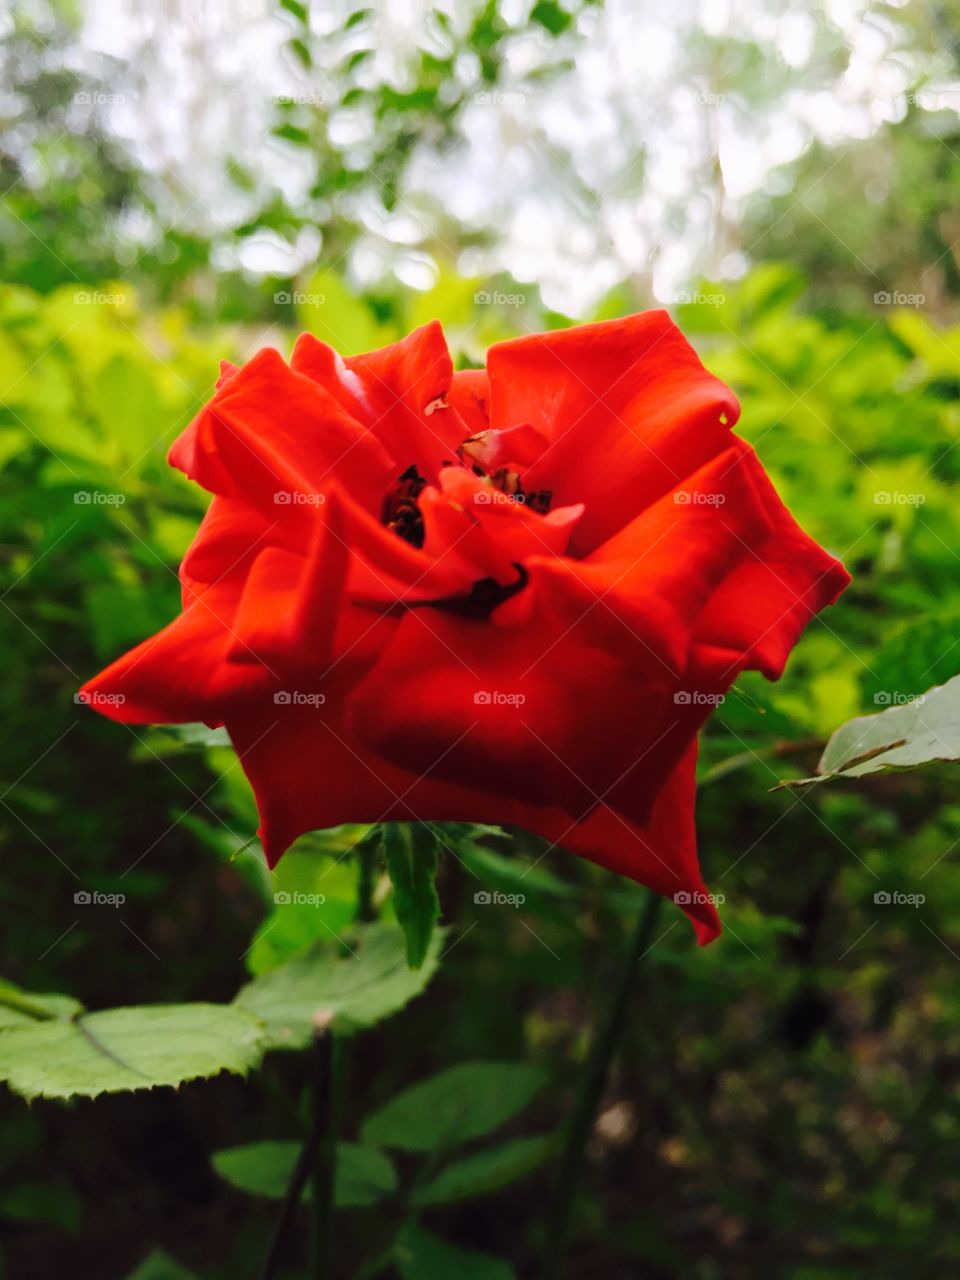 The Rose is in my garden